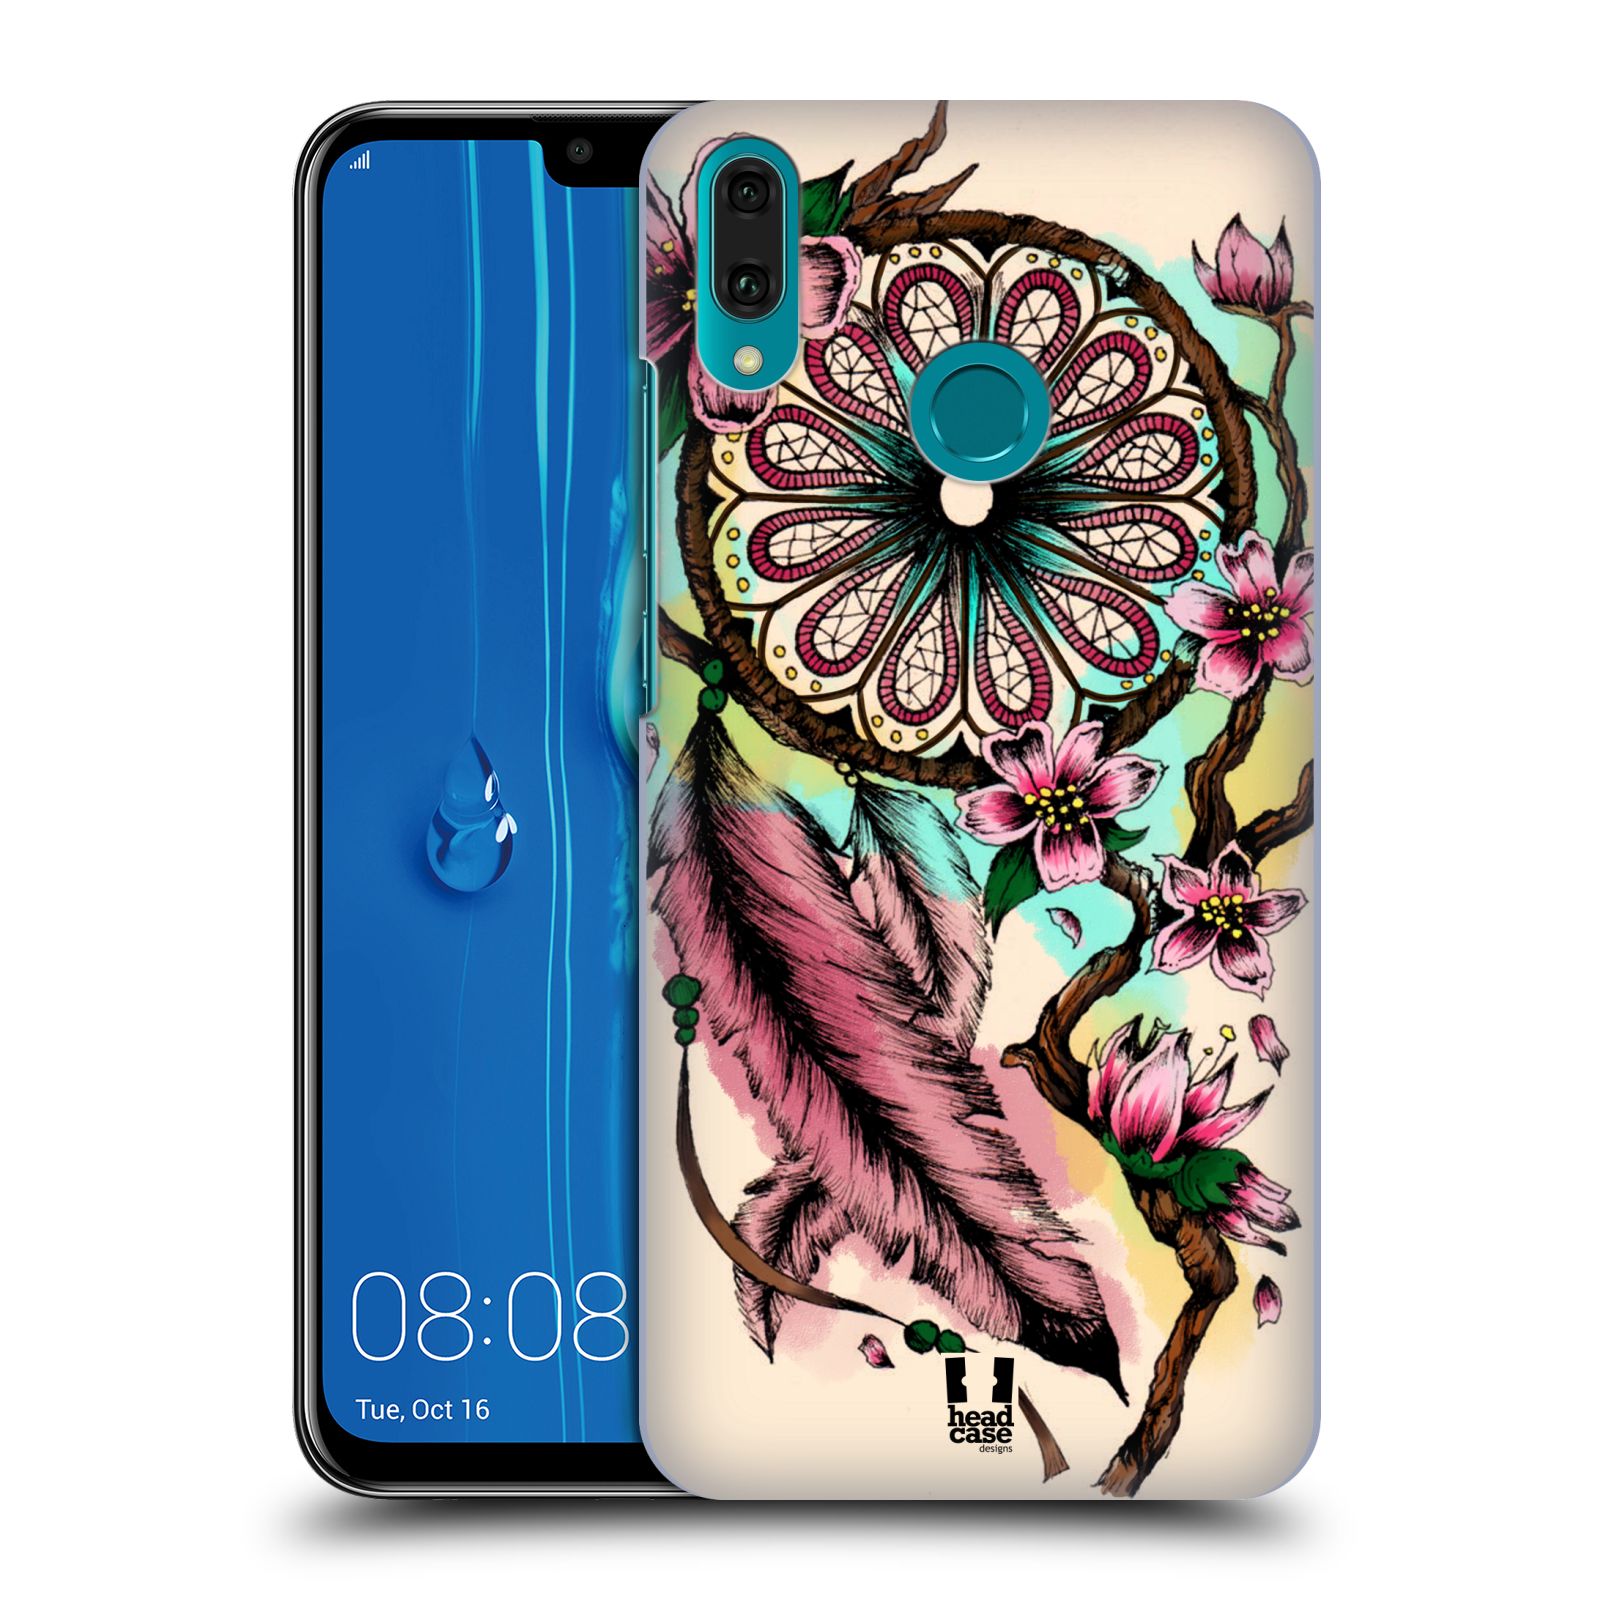 Pouzdro na mobil Huawei Y9 2019 - HEAD CASE - vzor Květy lapač snů růžová